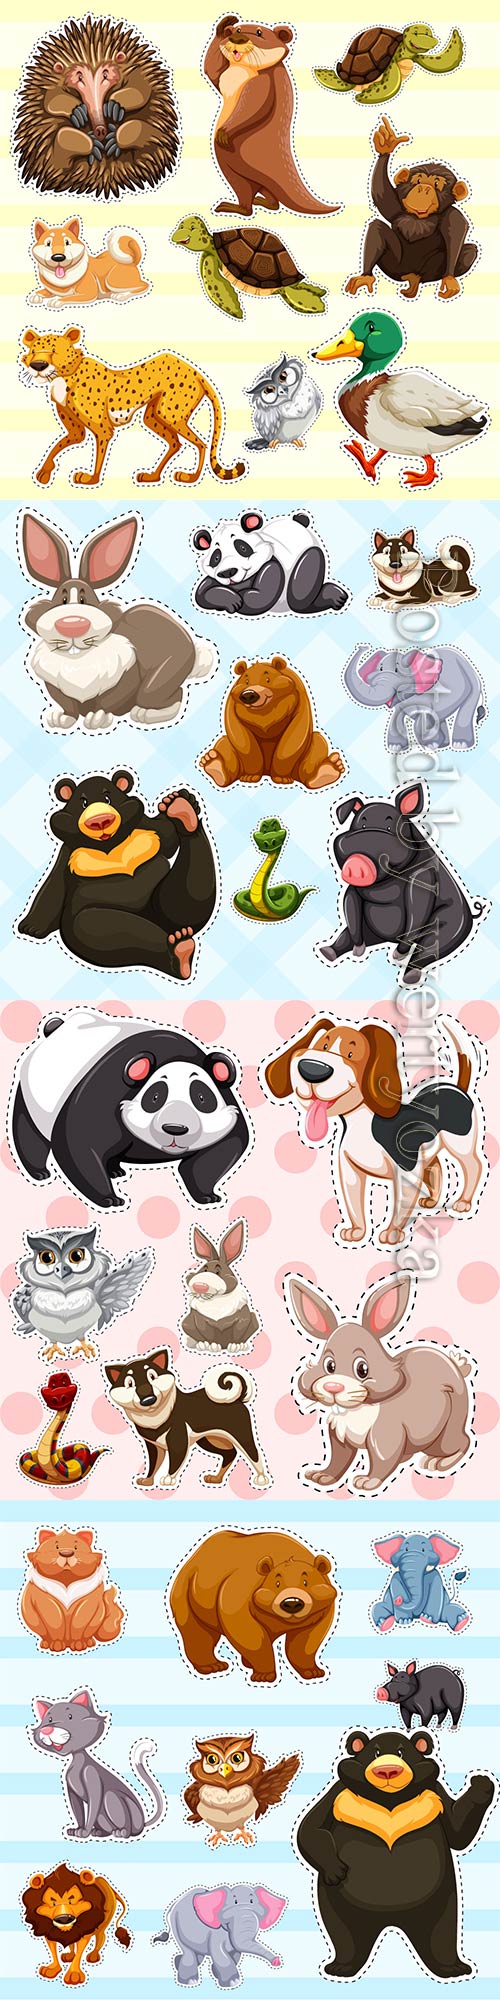 Sticker set with cute animals